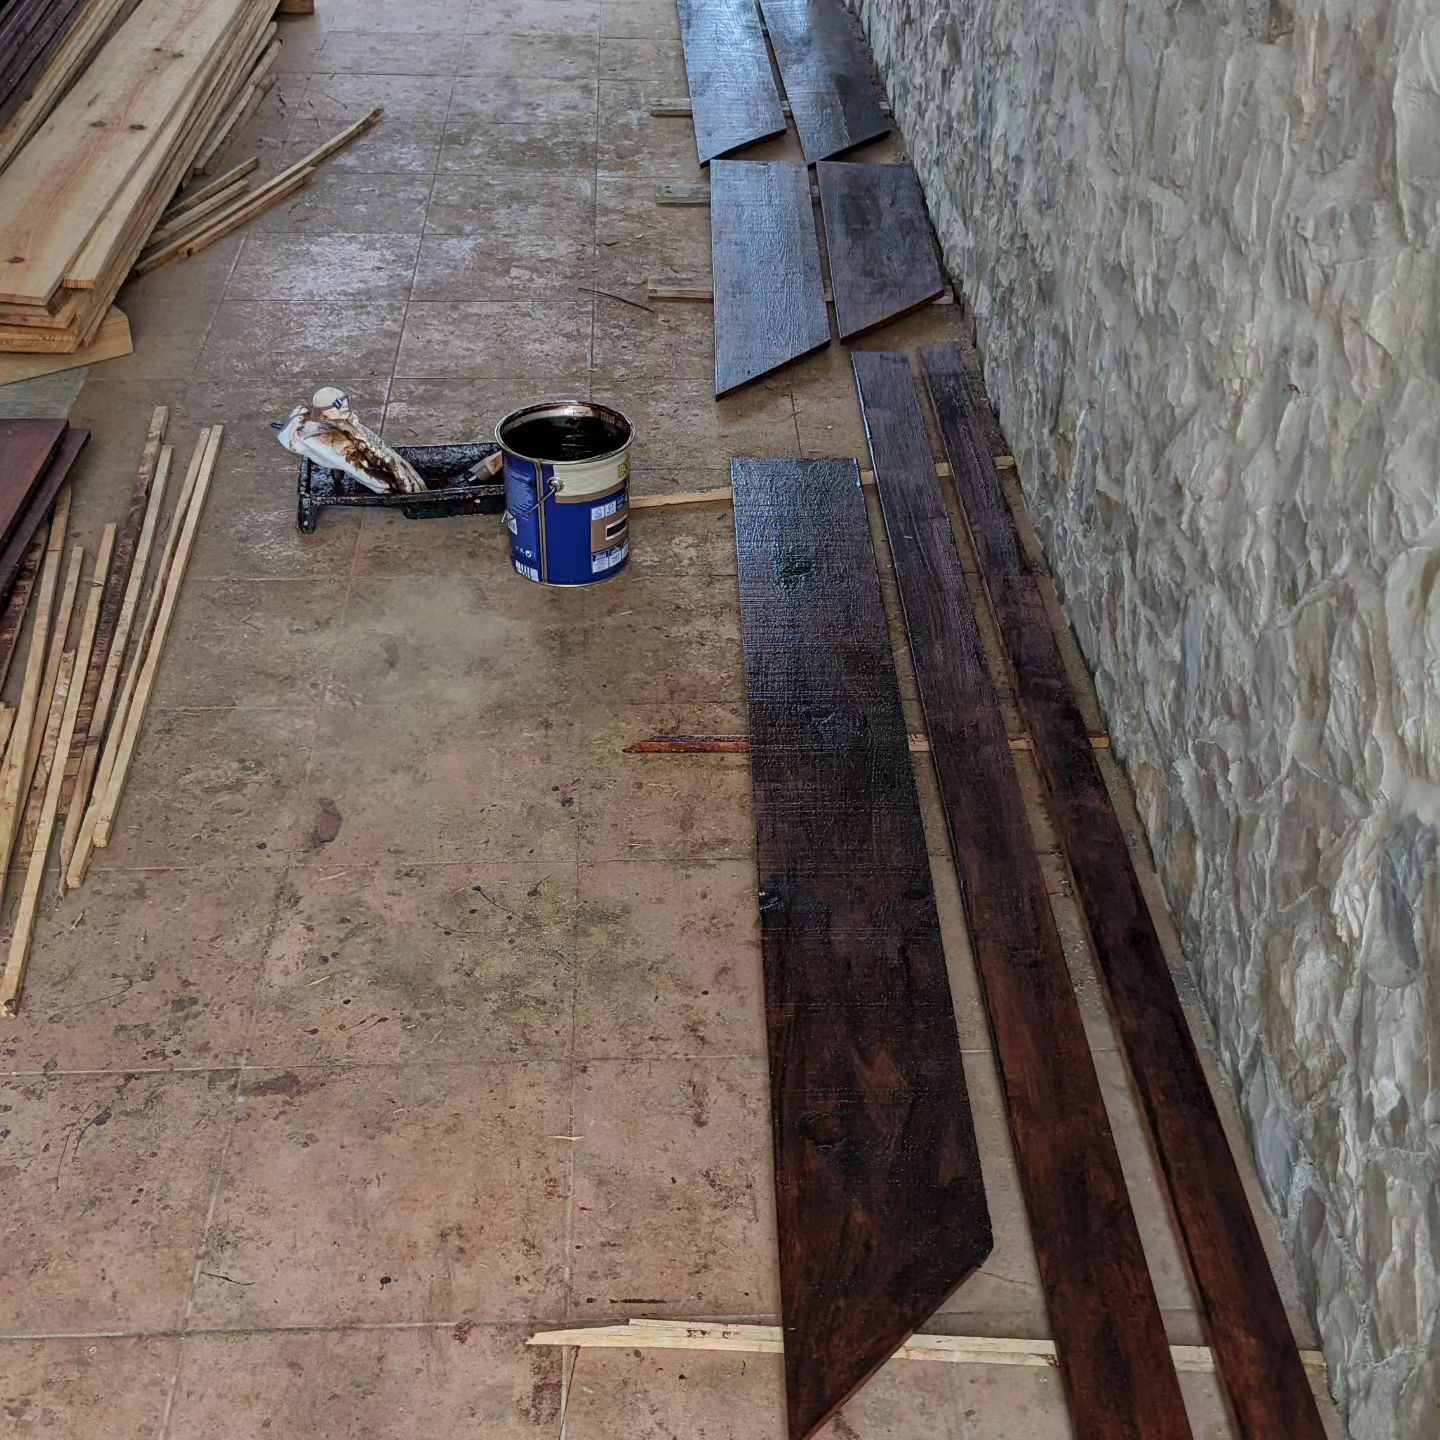 Varnishing planks for the next bird house